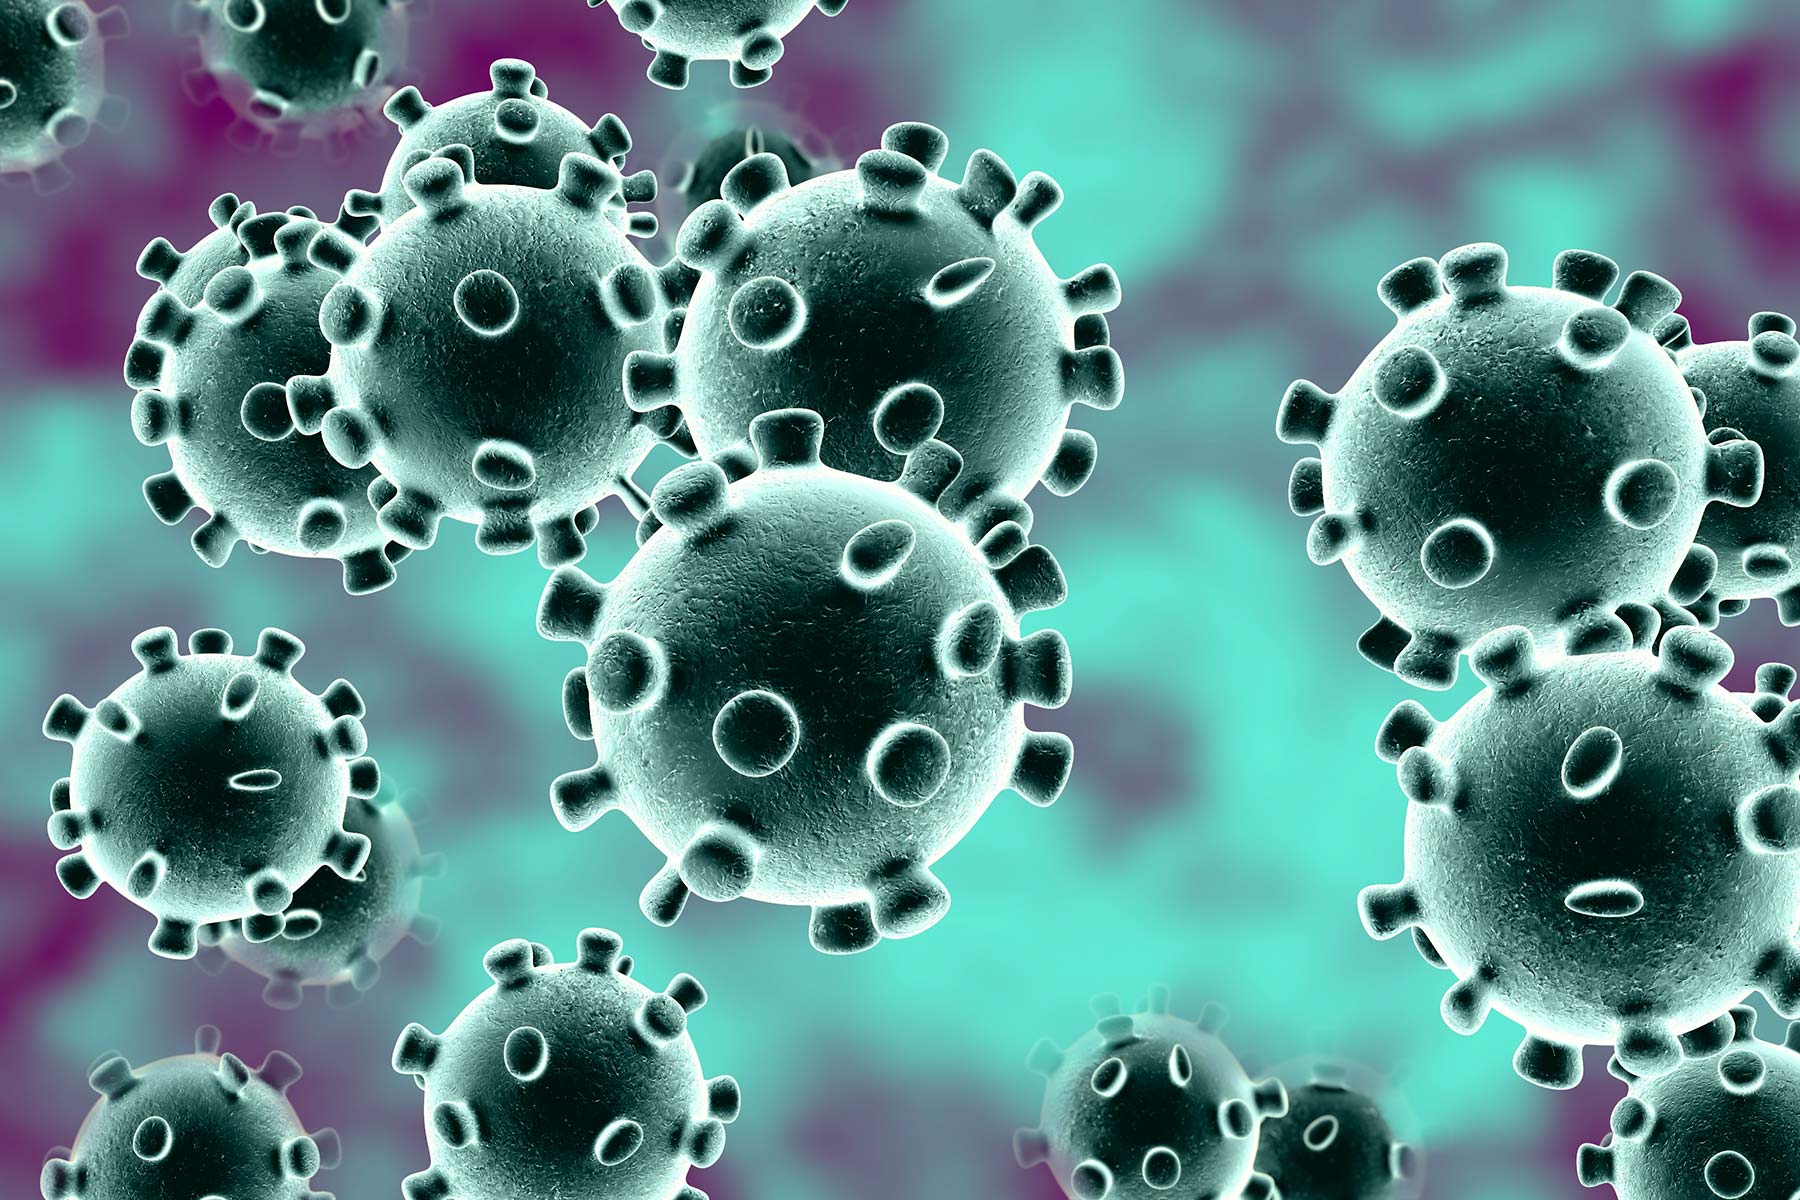 Help Stop the Spread - Coronavirus 